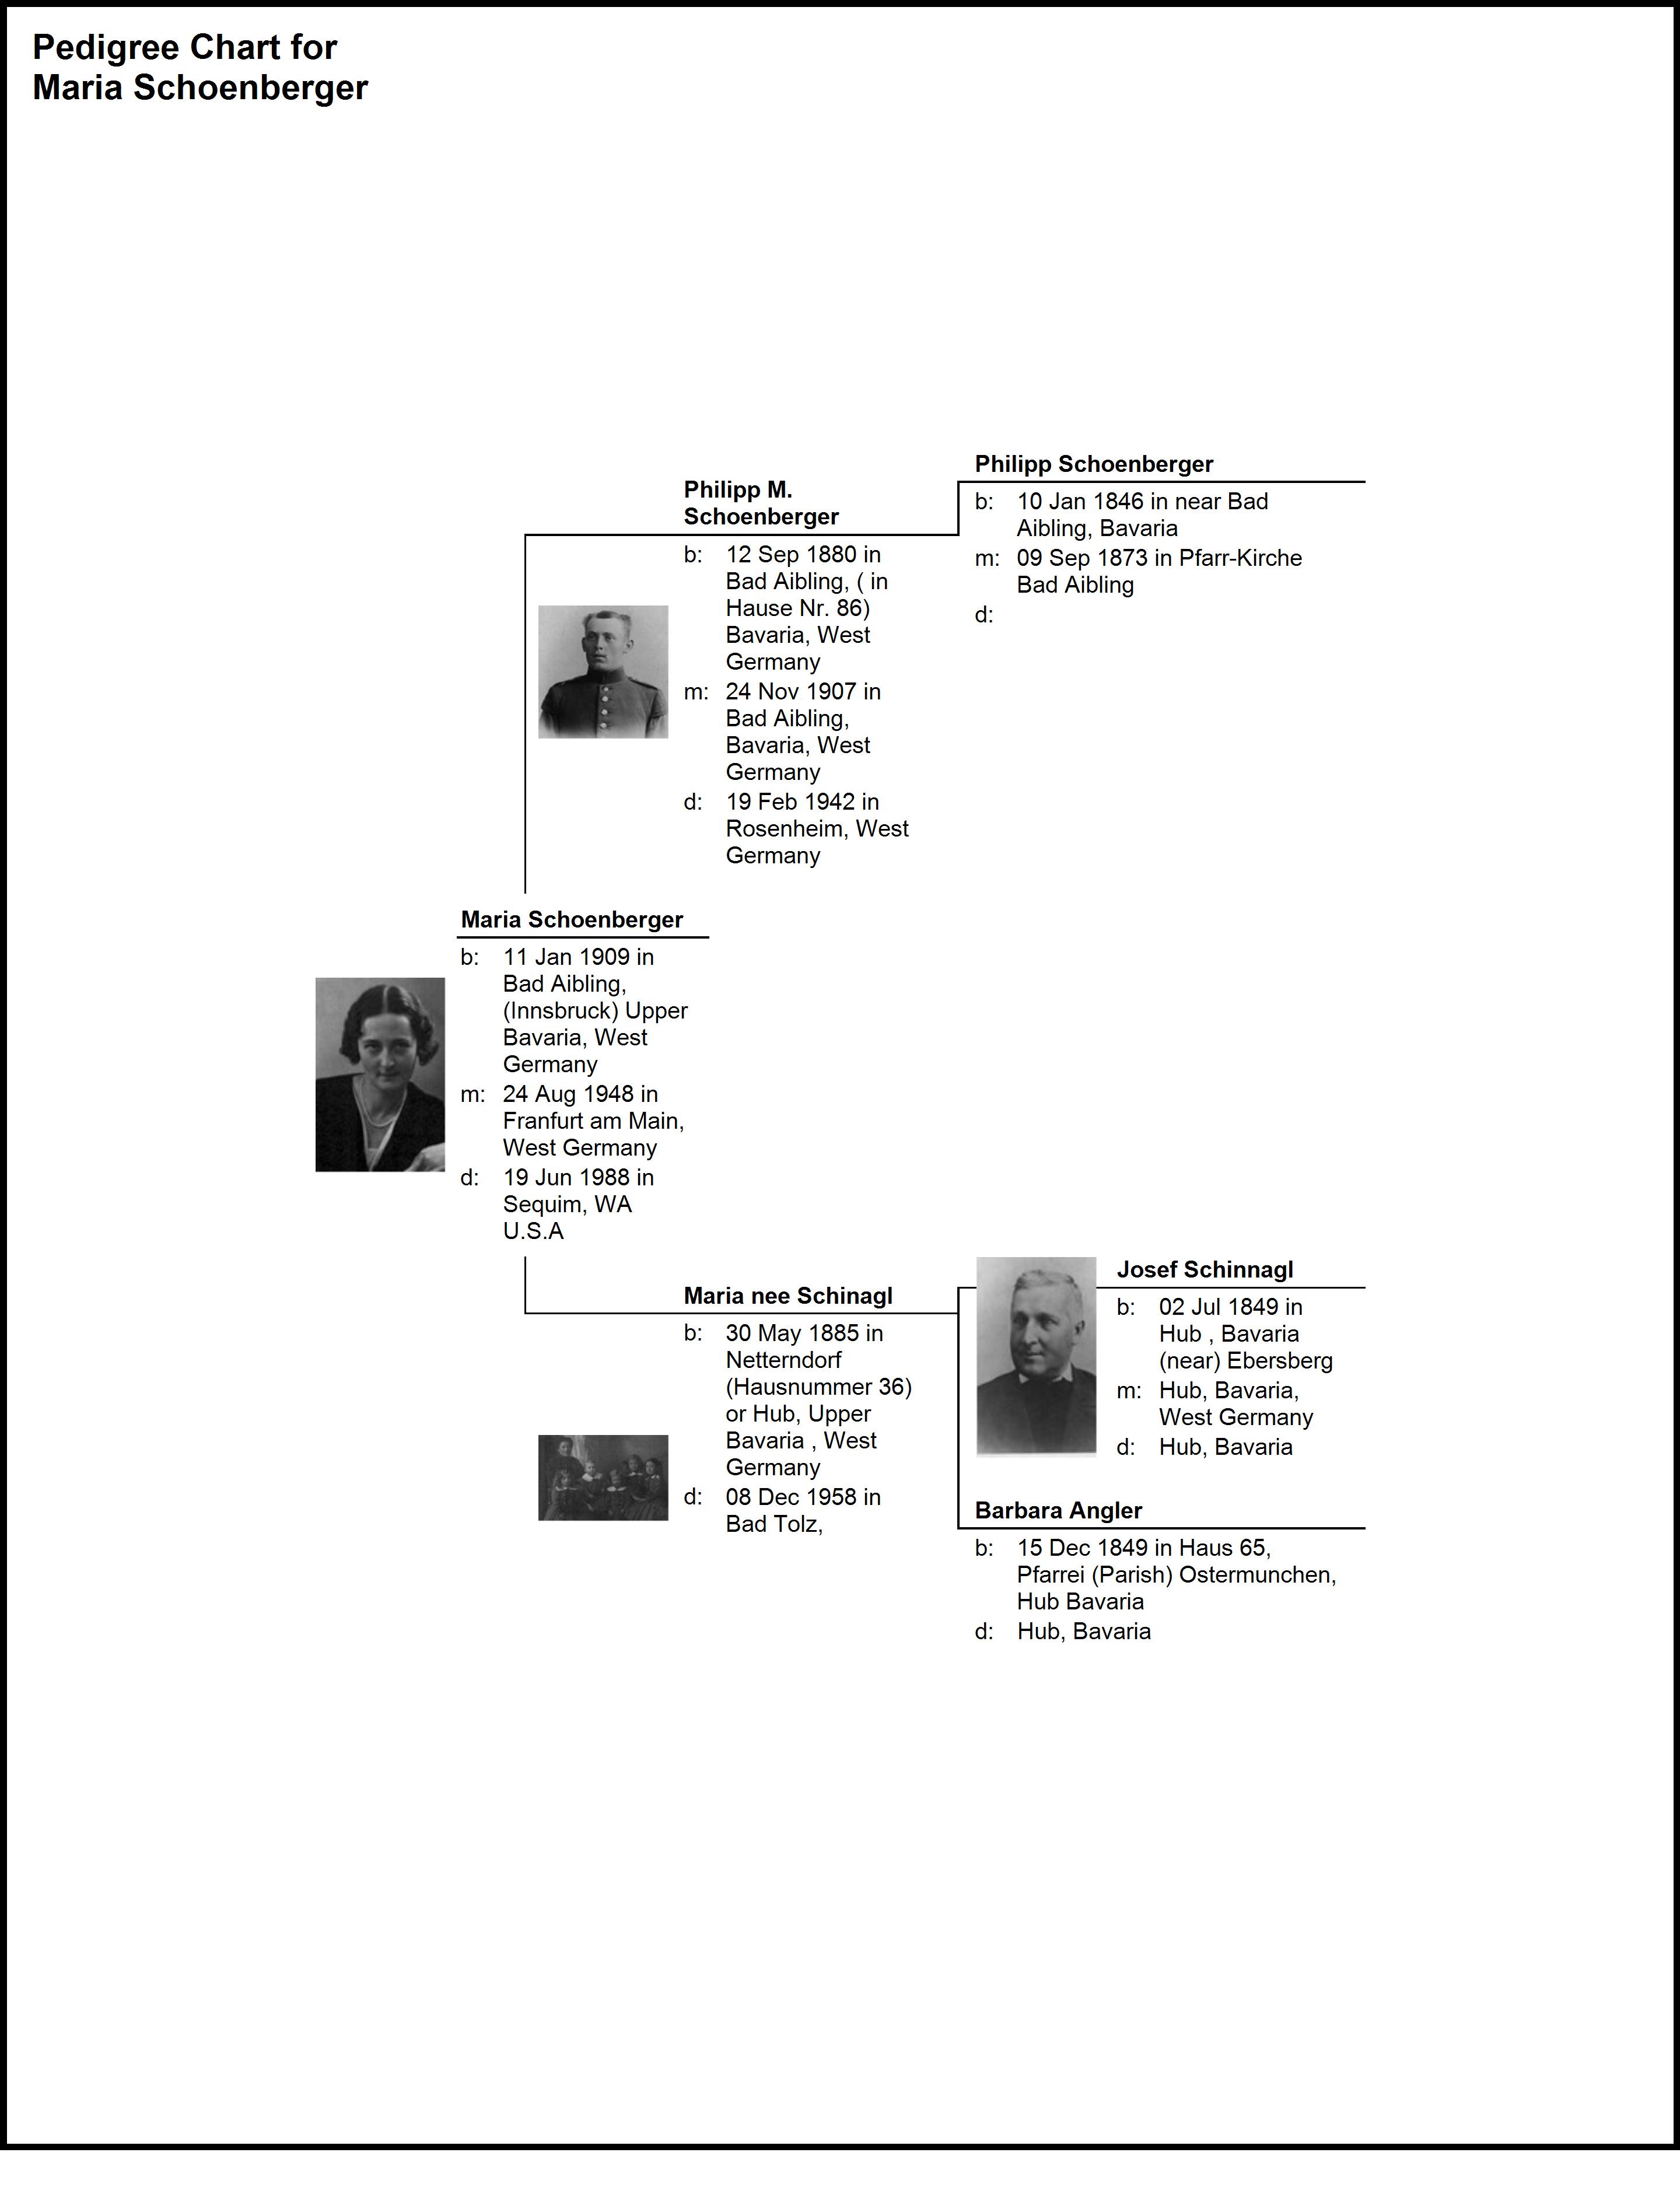 Pedigree Chart for Maria Schoenberger